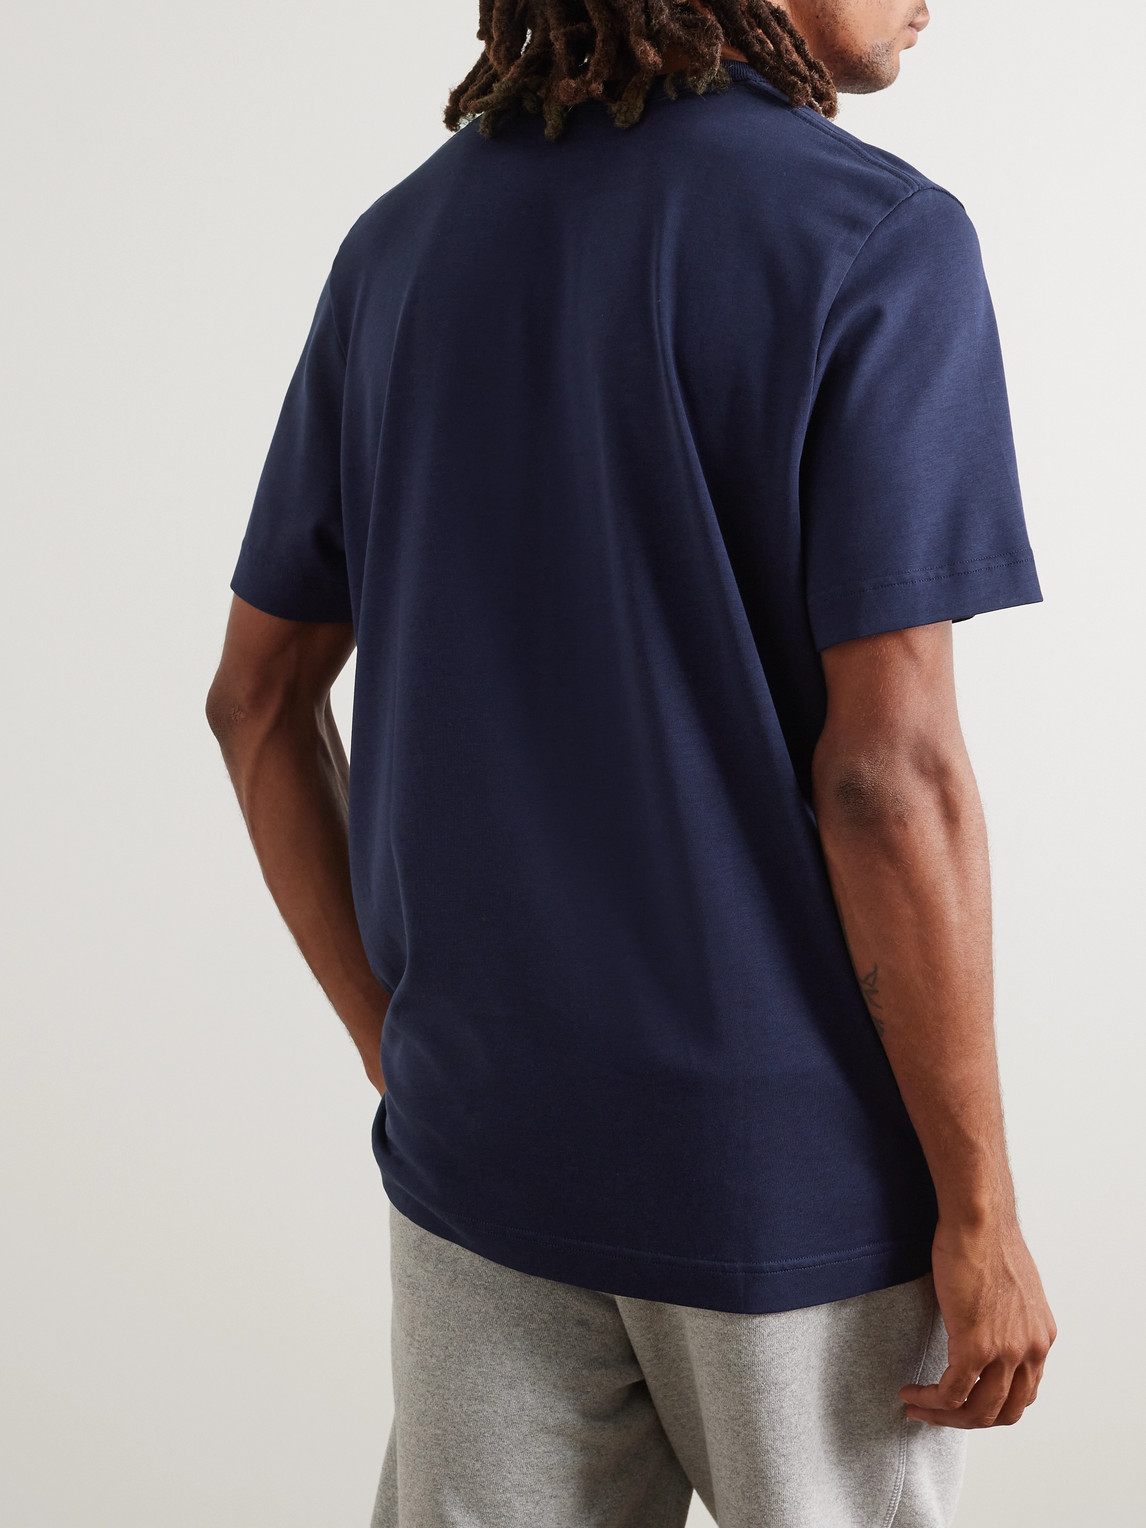 Shop Cdlp Lyocell And Pima Cotton-blend Jersey T-shirt In Blue